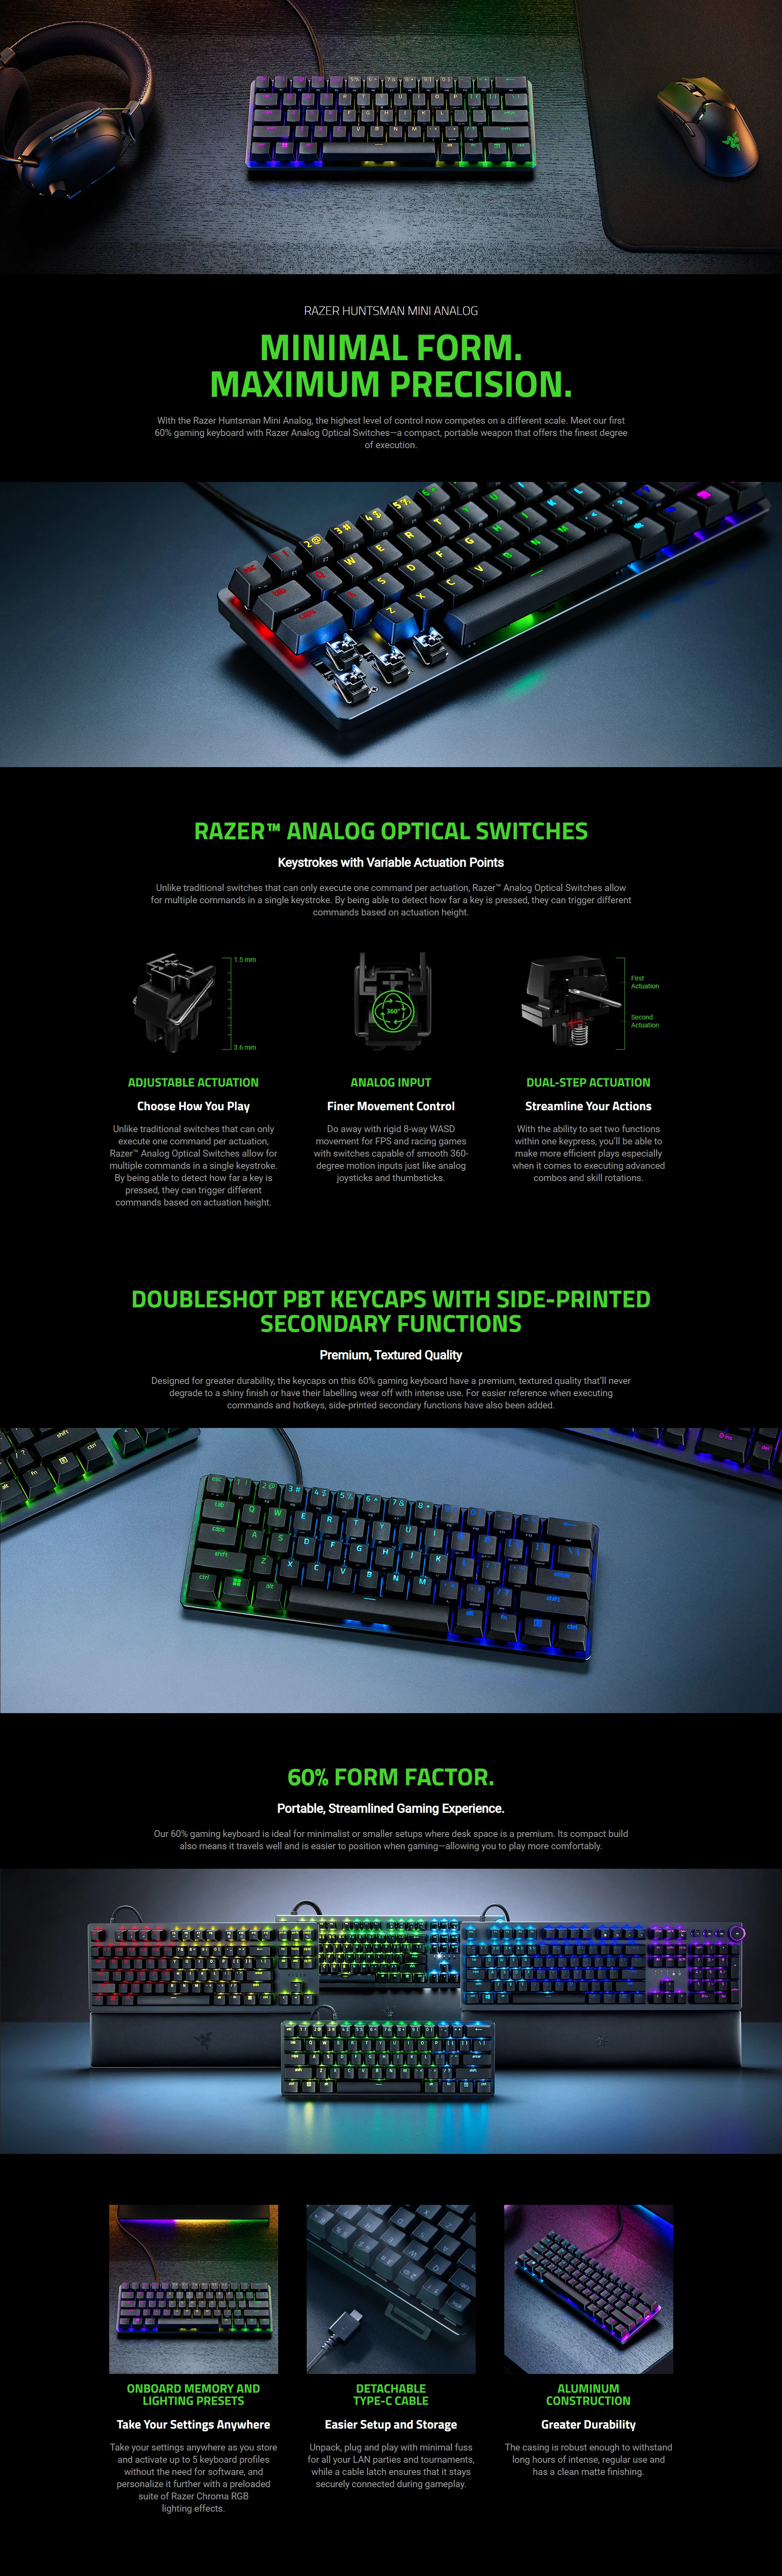 Overview - Razer Huntsman Mini Analog 60% Gaming Keyboard with Analog Optical Switches